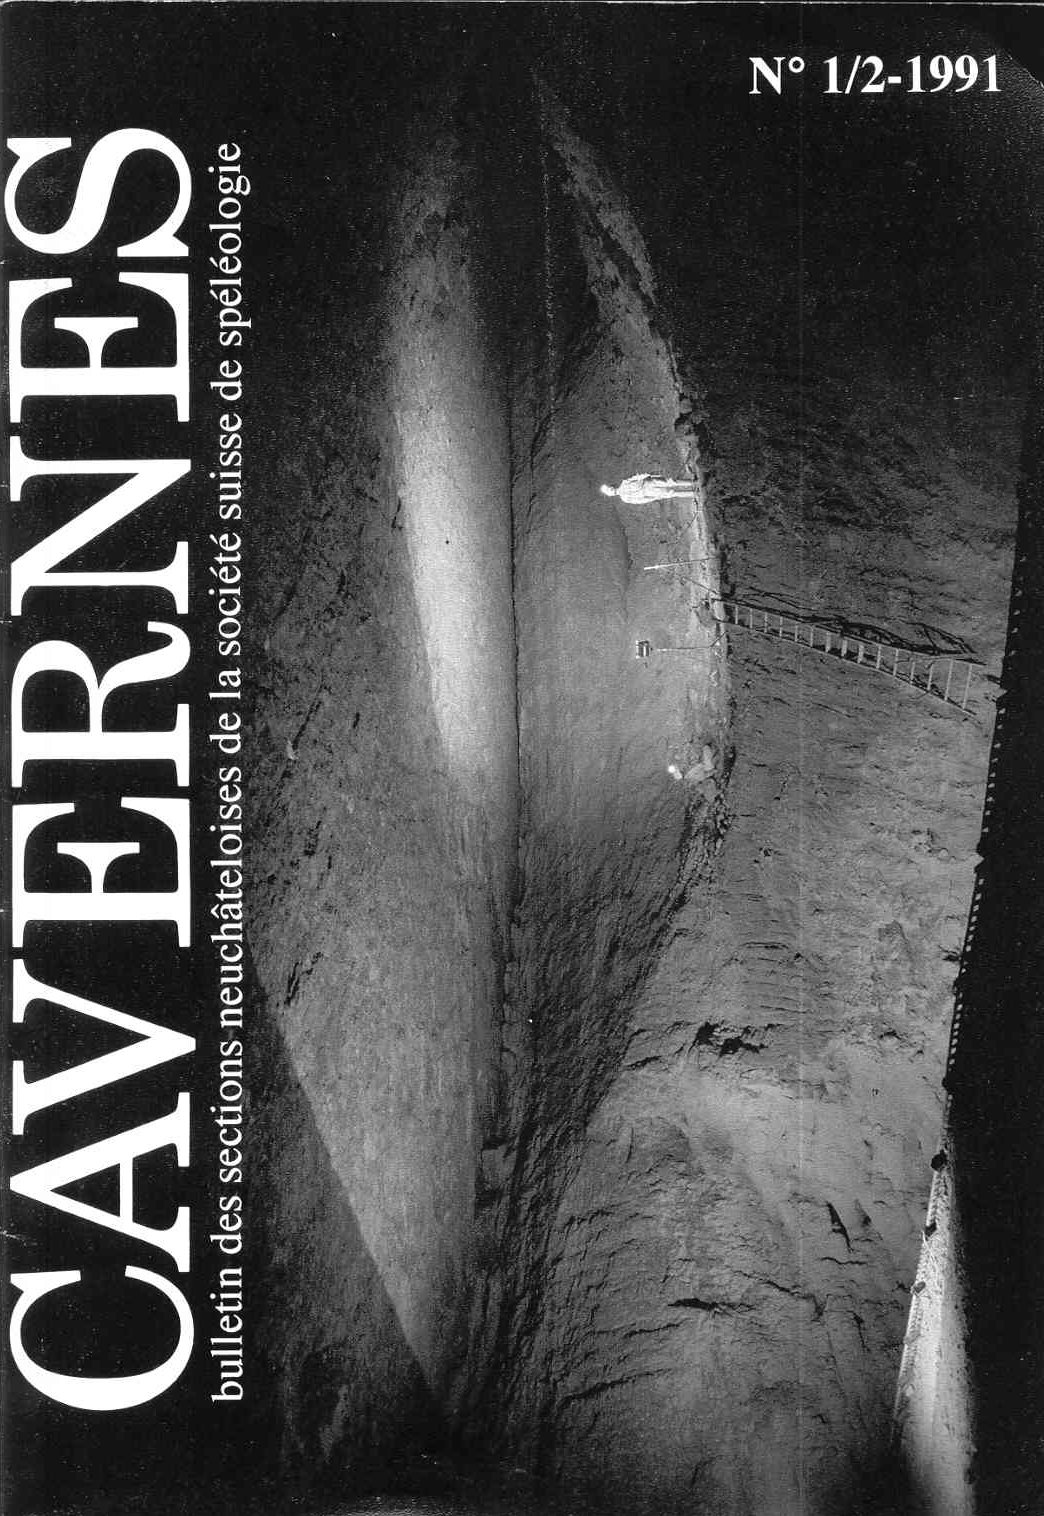 Cavernes/copertina anno 1991 n°1 e 2.jpg